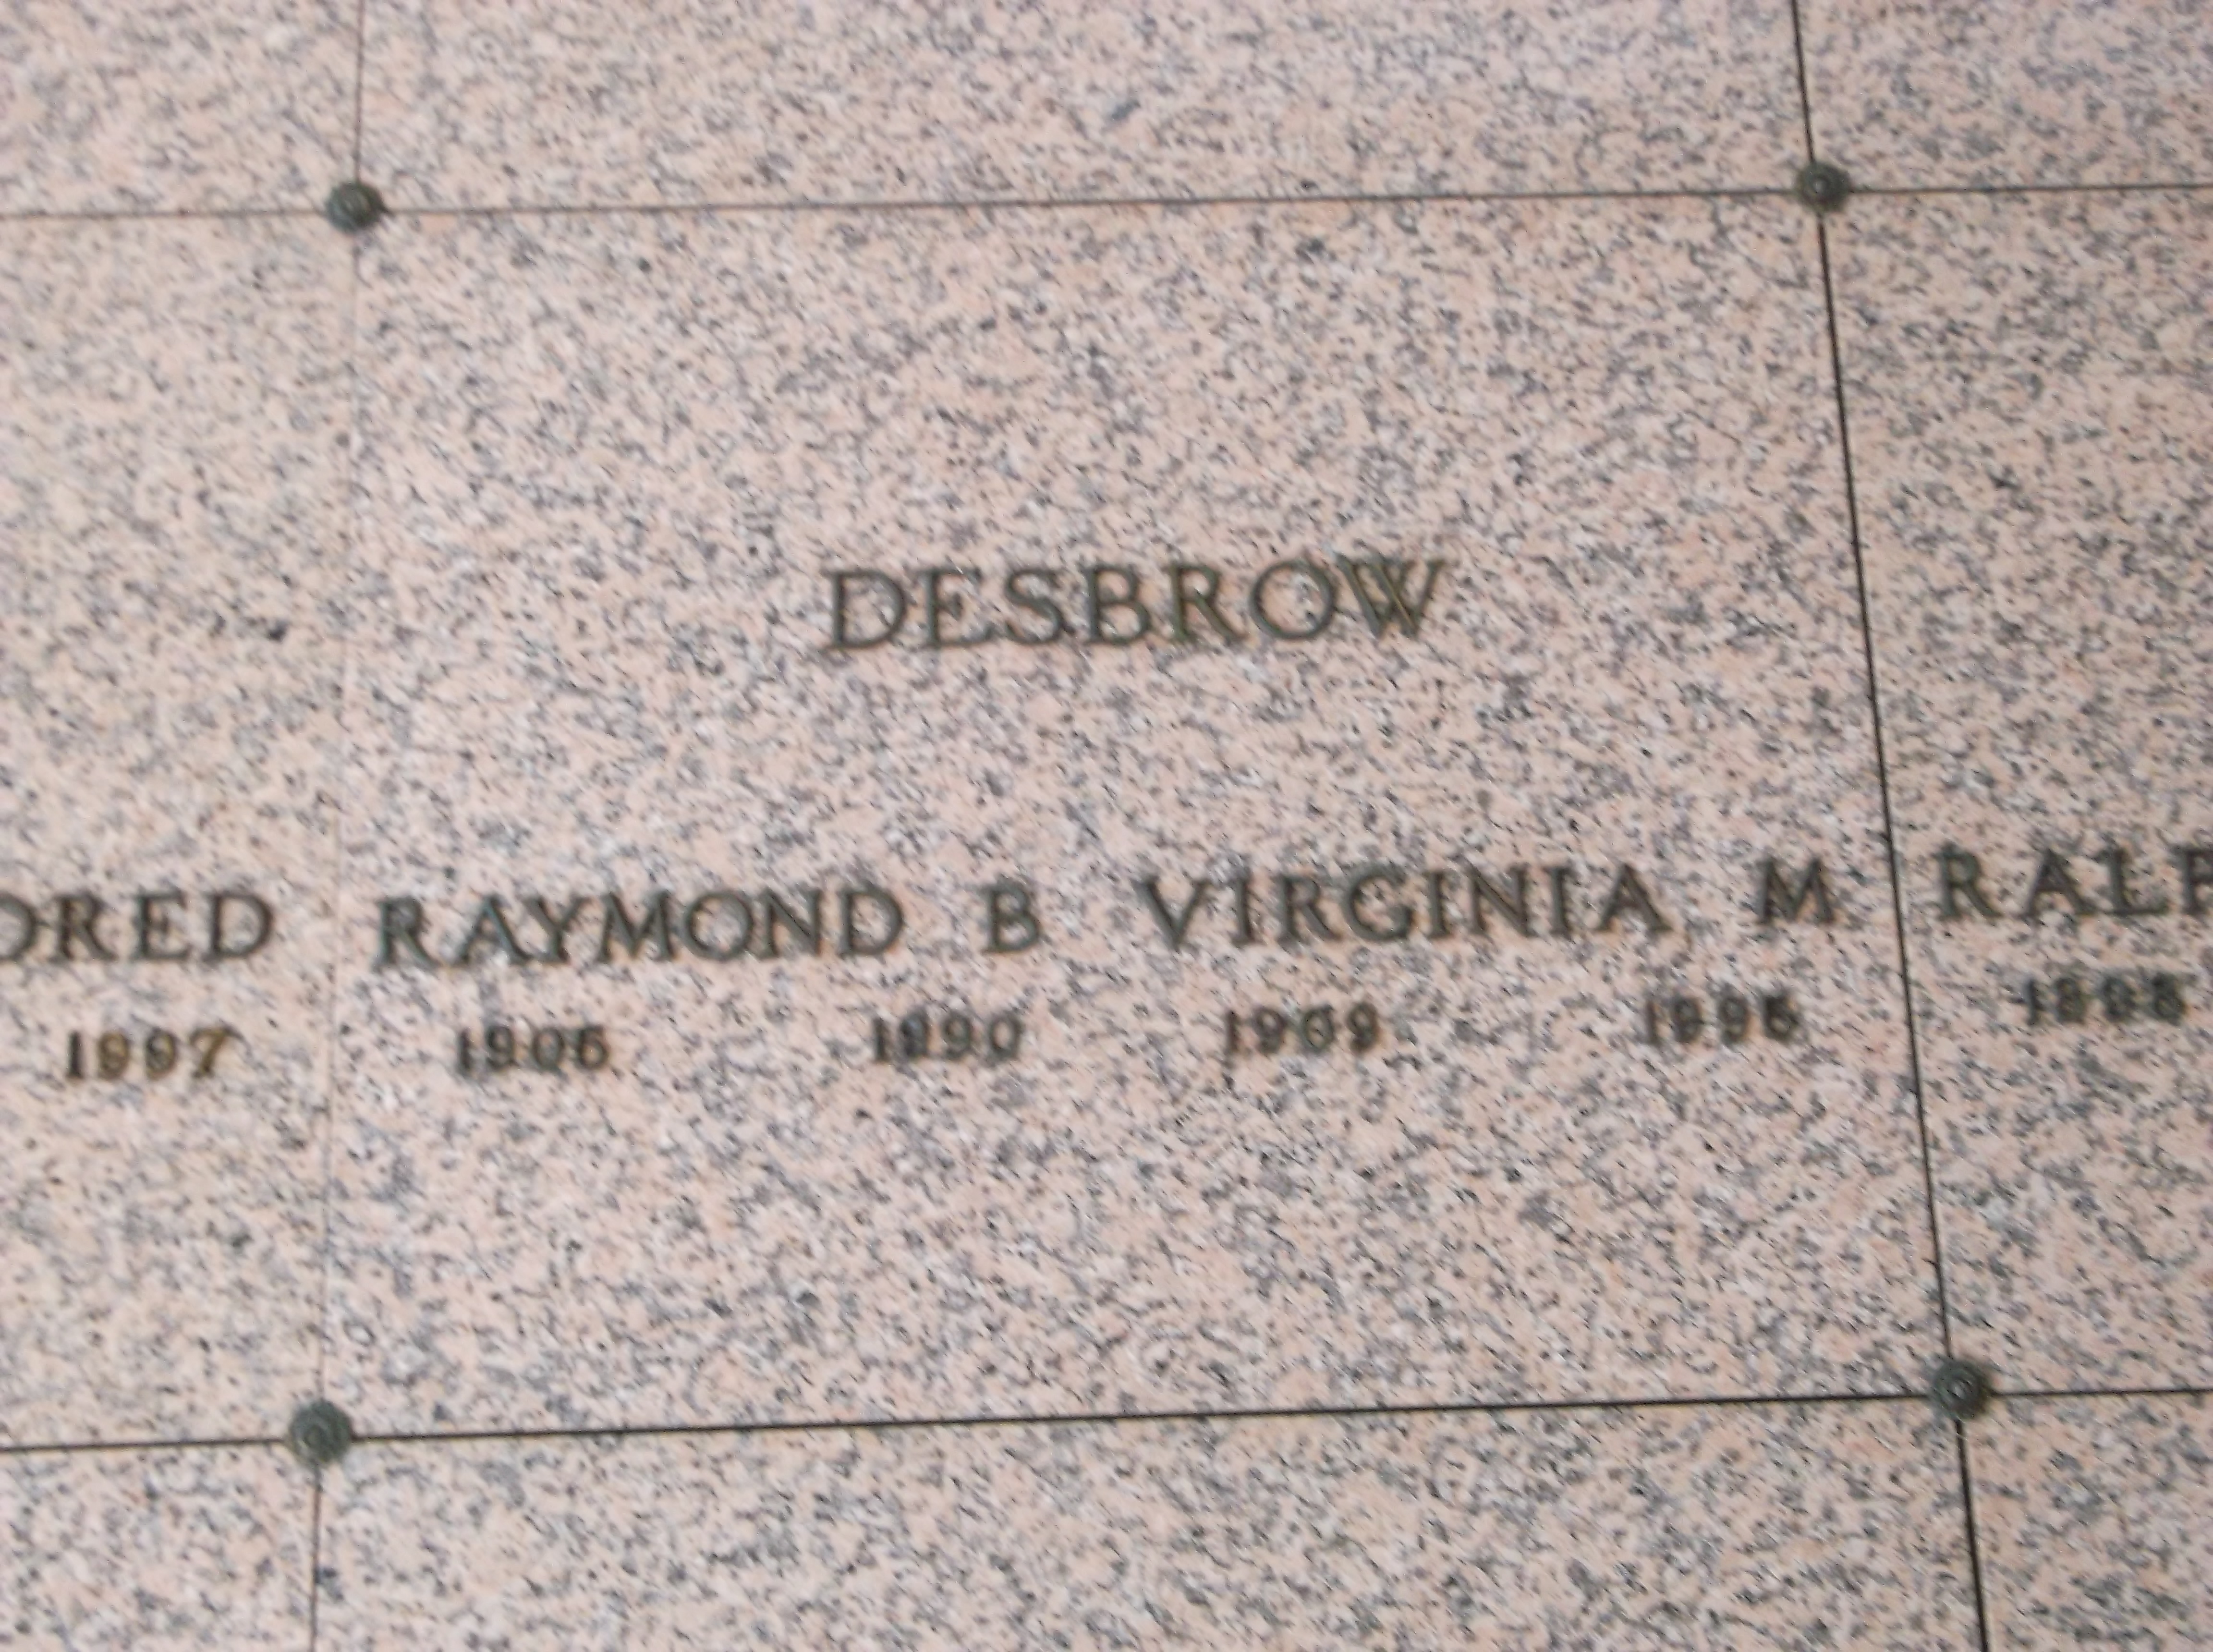 Raymond B Desbrow